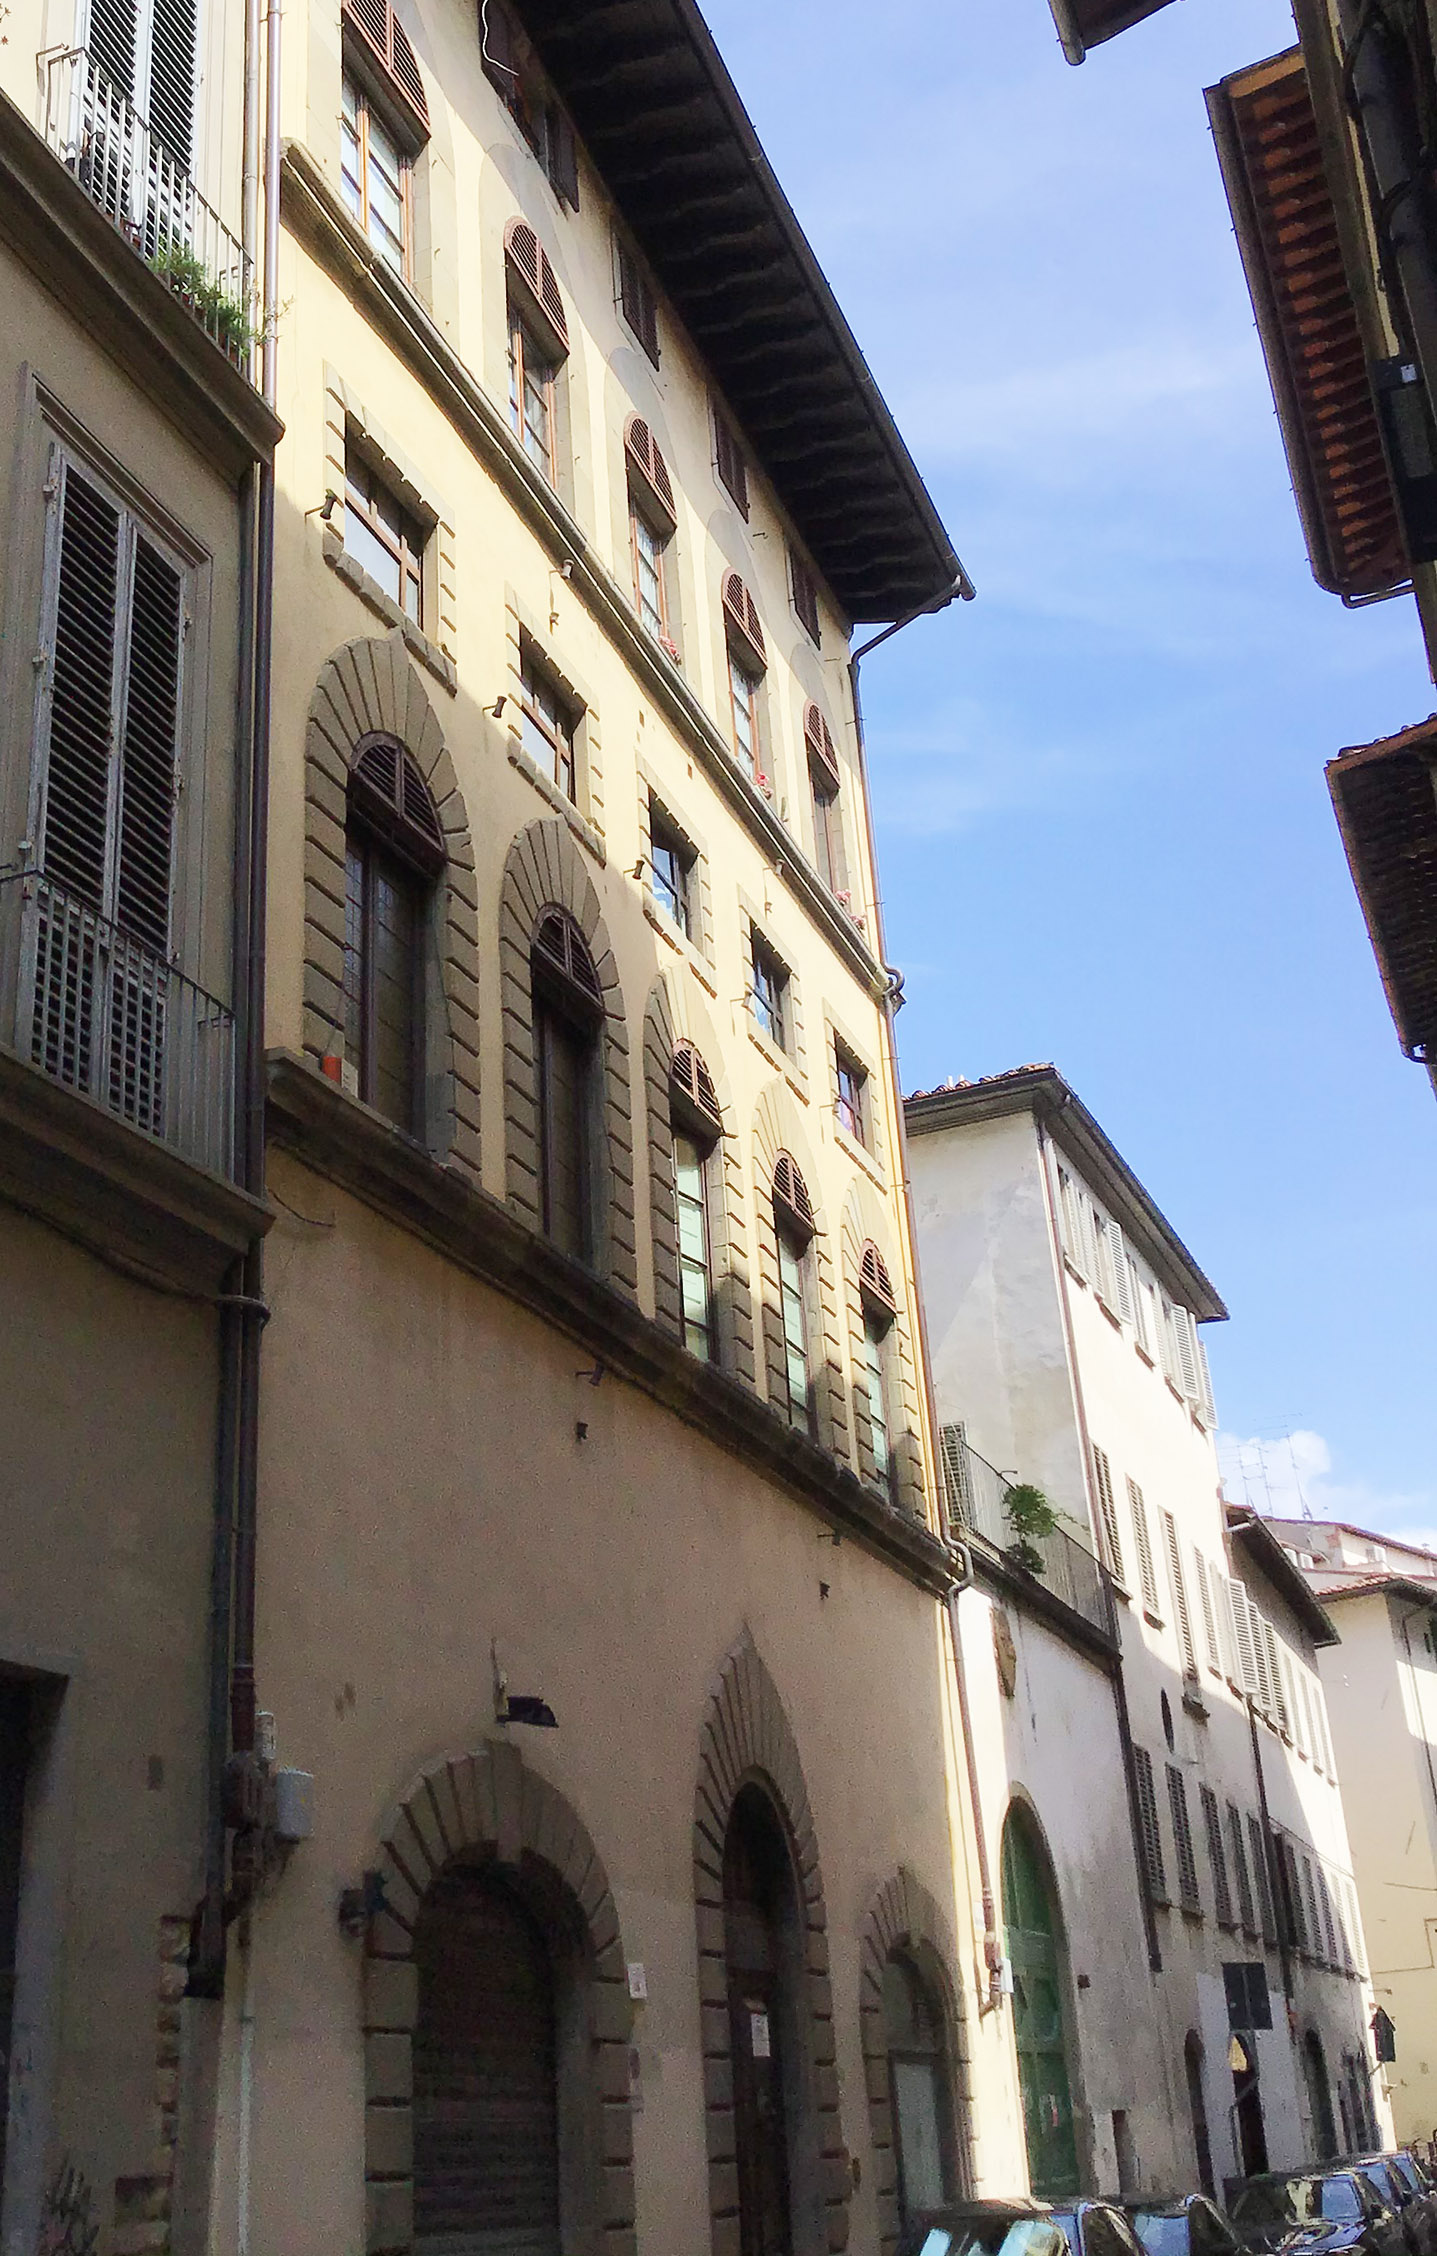 Palazzo Arrighi poi Pucci (palazzo) - Firenze (FI) 